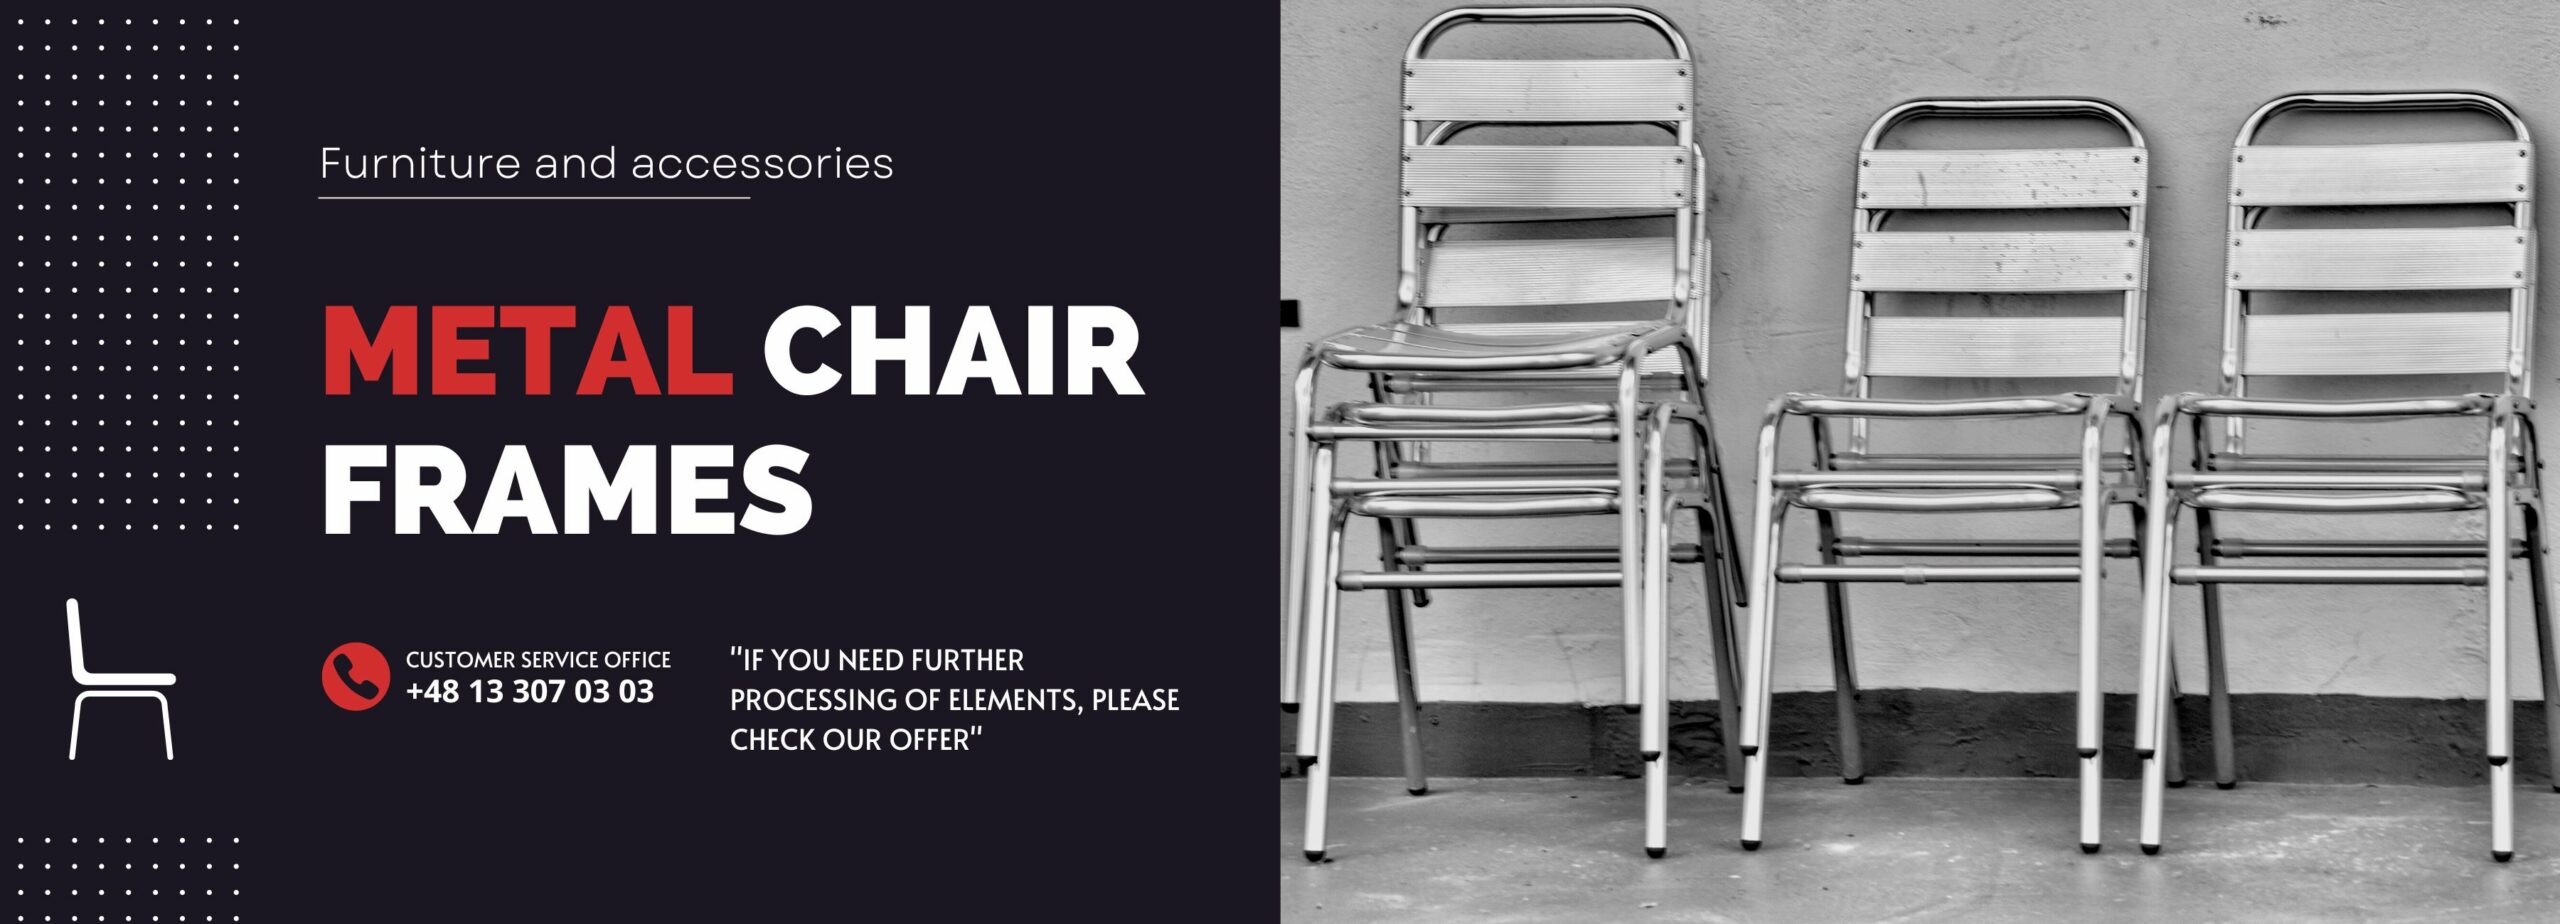 Metal chair frames manufacturer -2